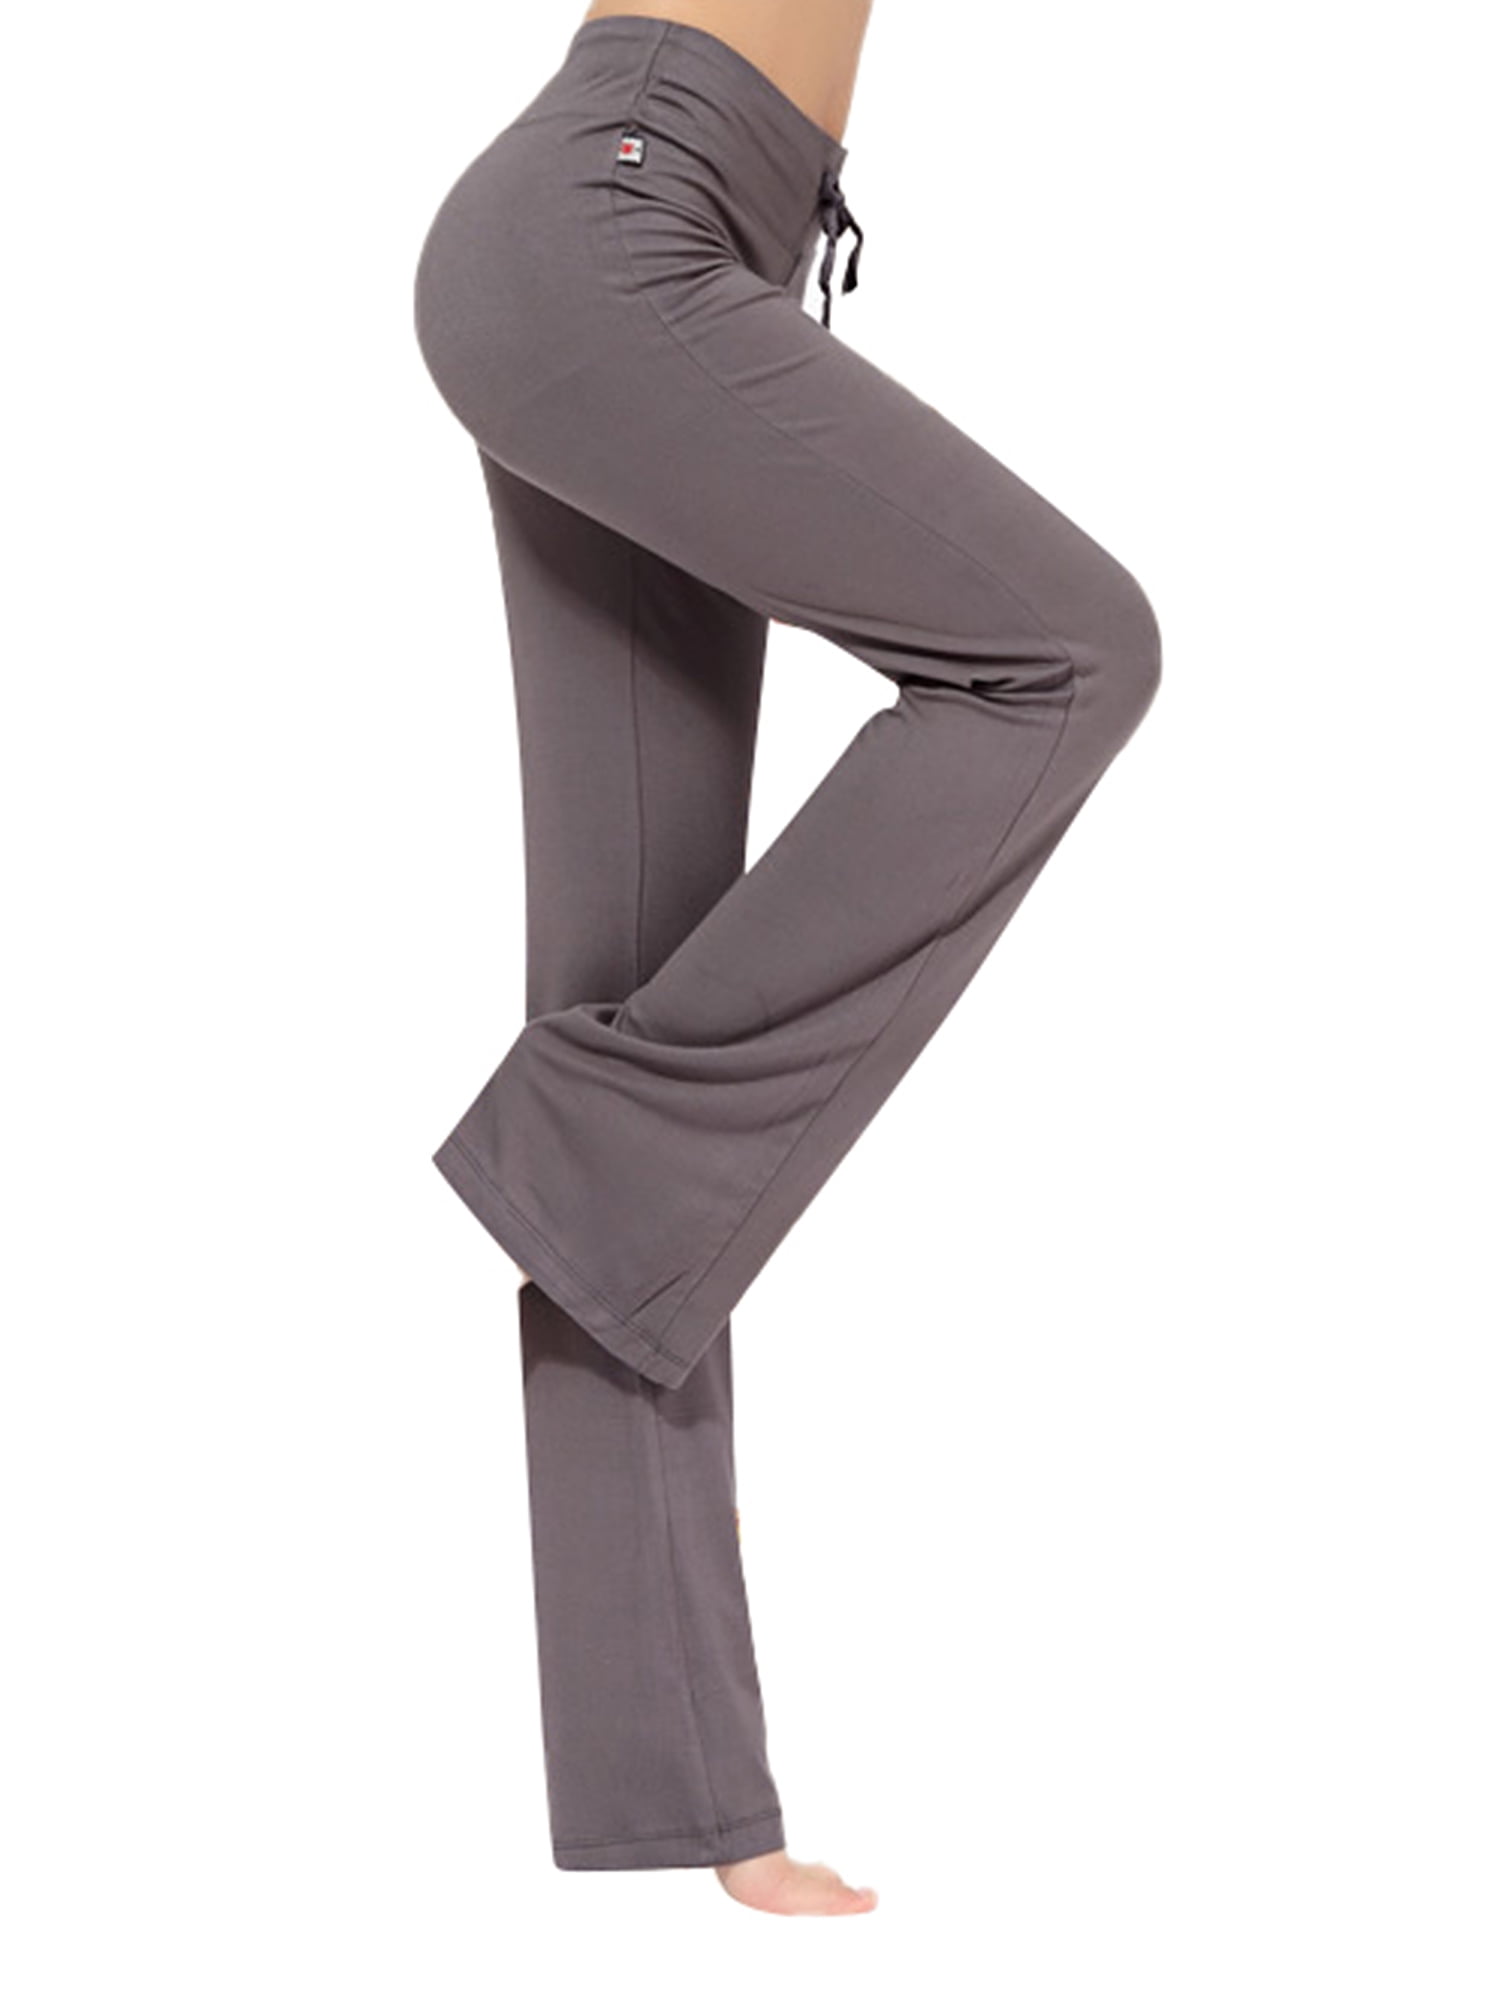 Fanteecy Women Yoga Pants Low-Rise Wide Leg Bottoms Comfy Drawstring Loose Straight Lounge Pants Workout Leggings